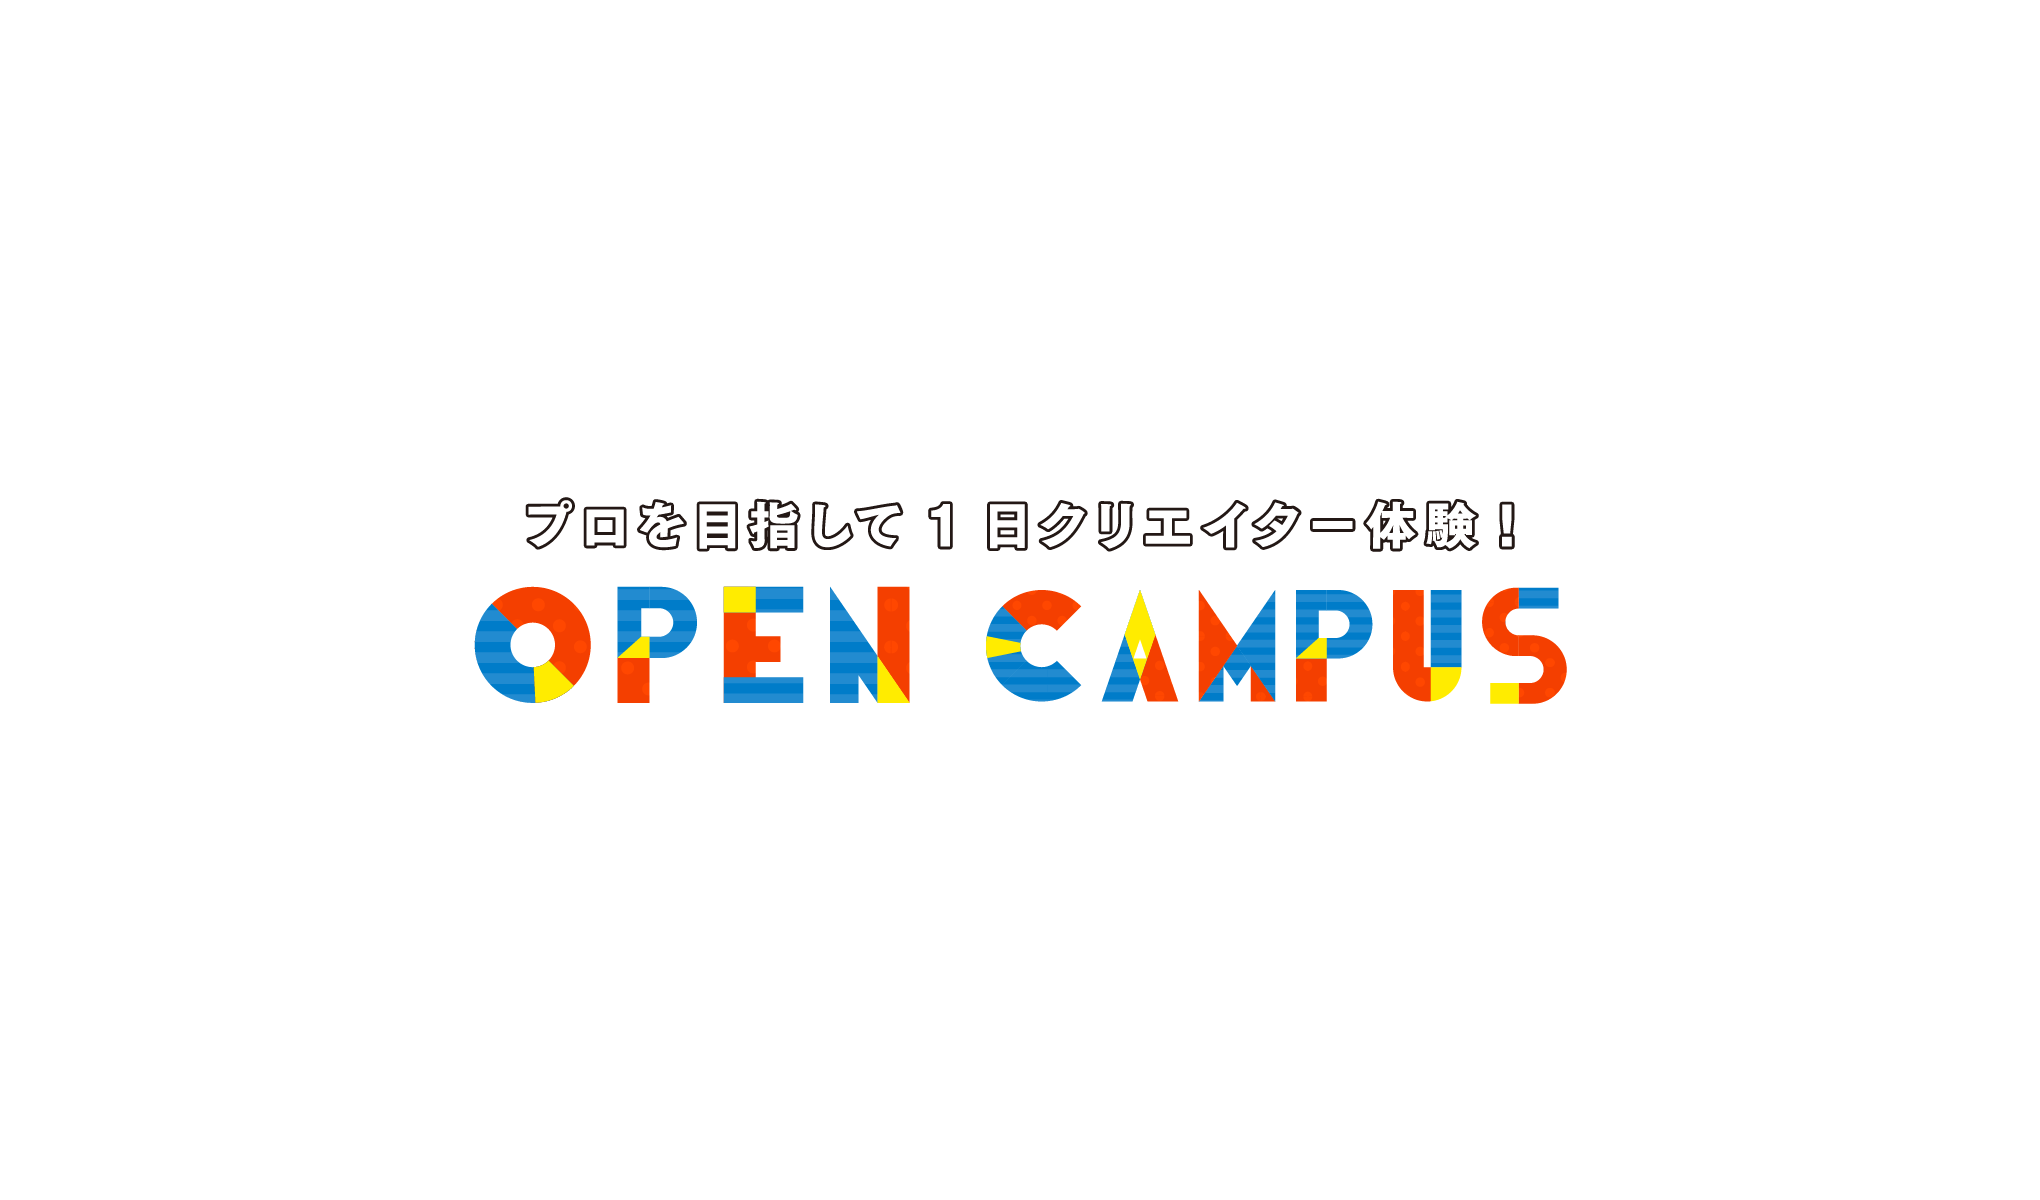 Open Campus 体験入学 大阪総合デザイン専門学校